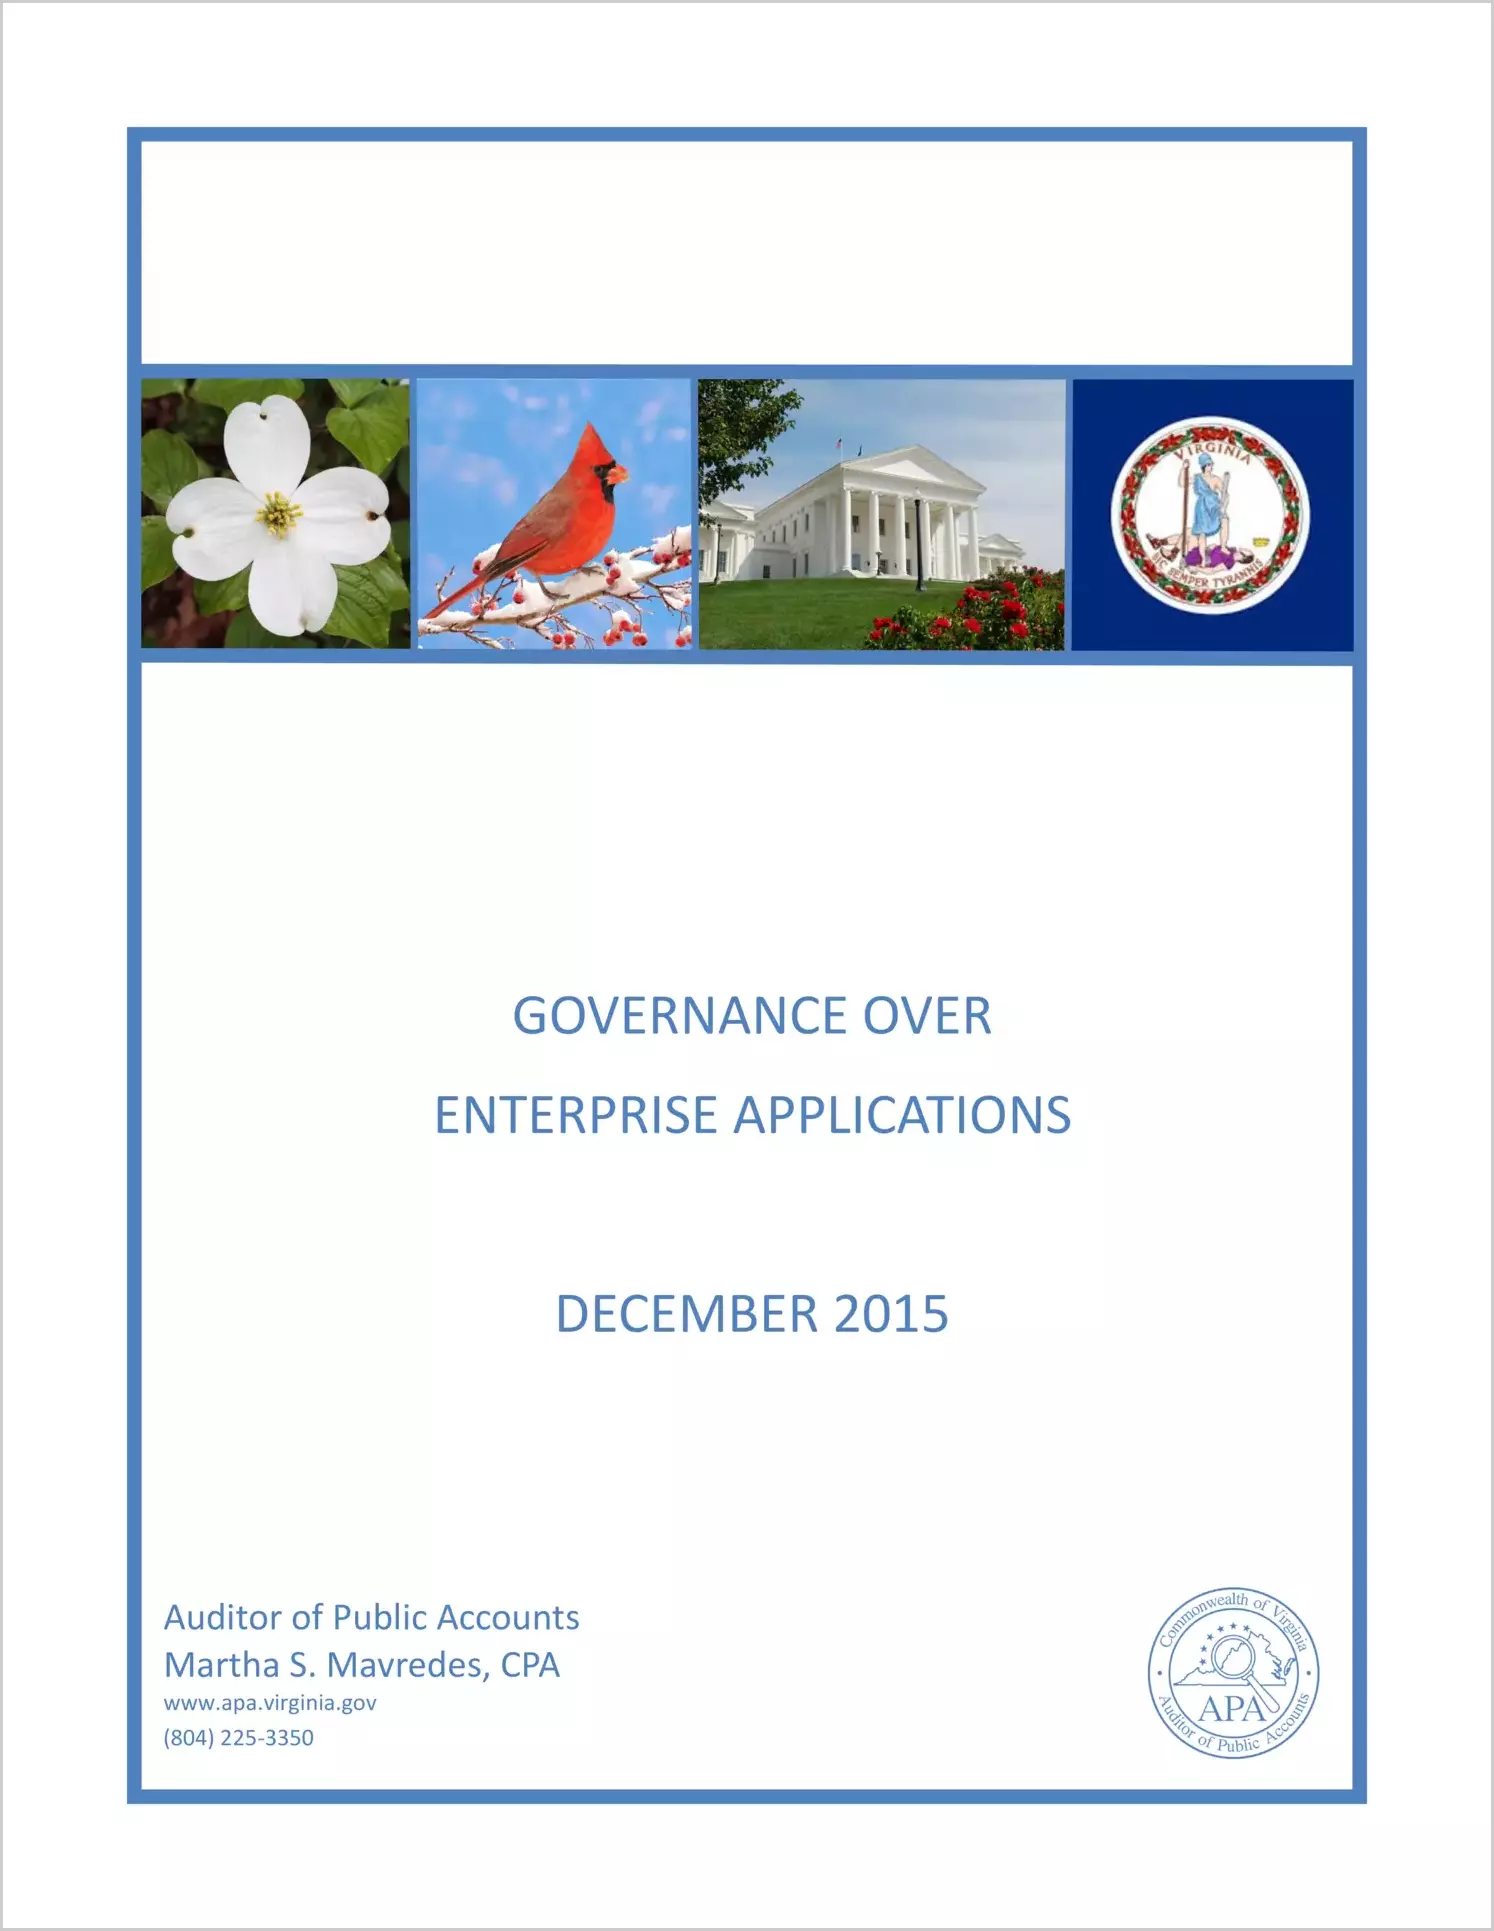 Governance over Enterprise Applications as of December 2015